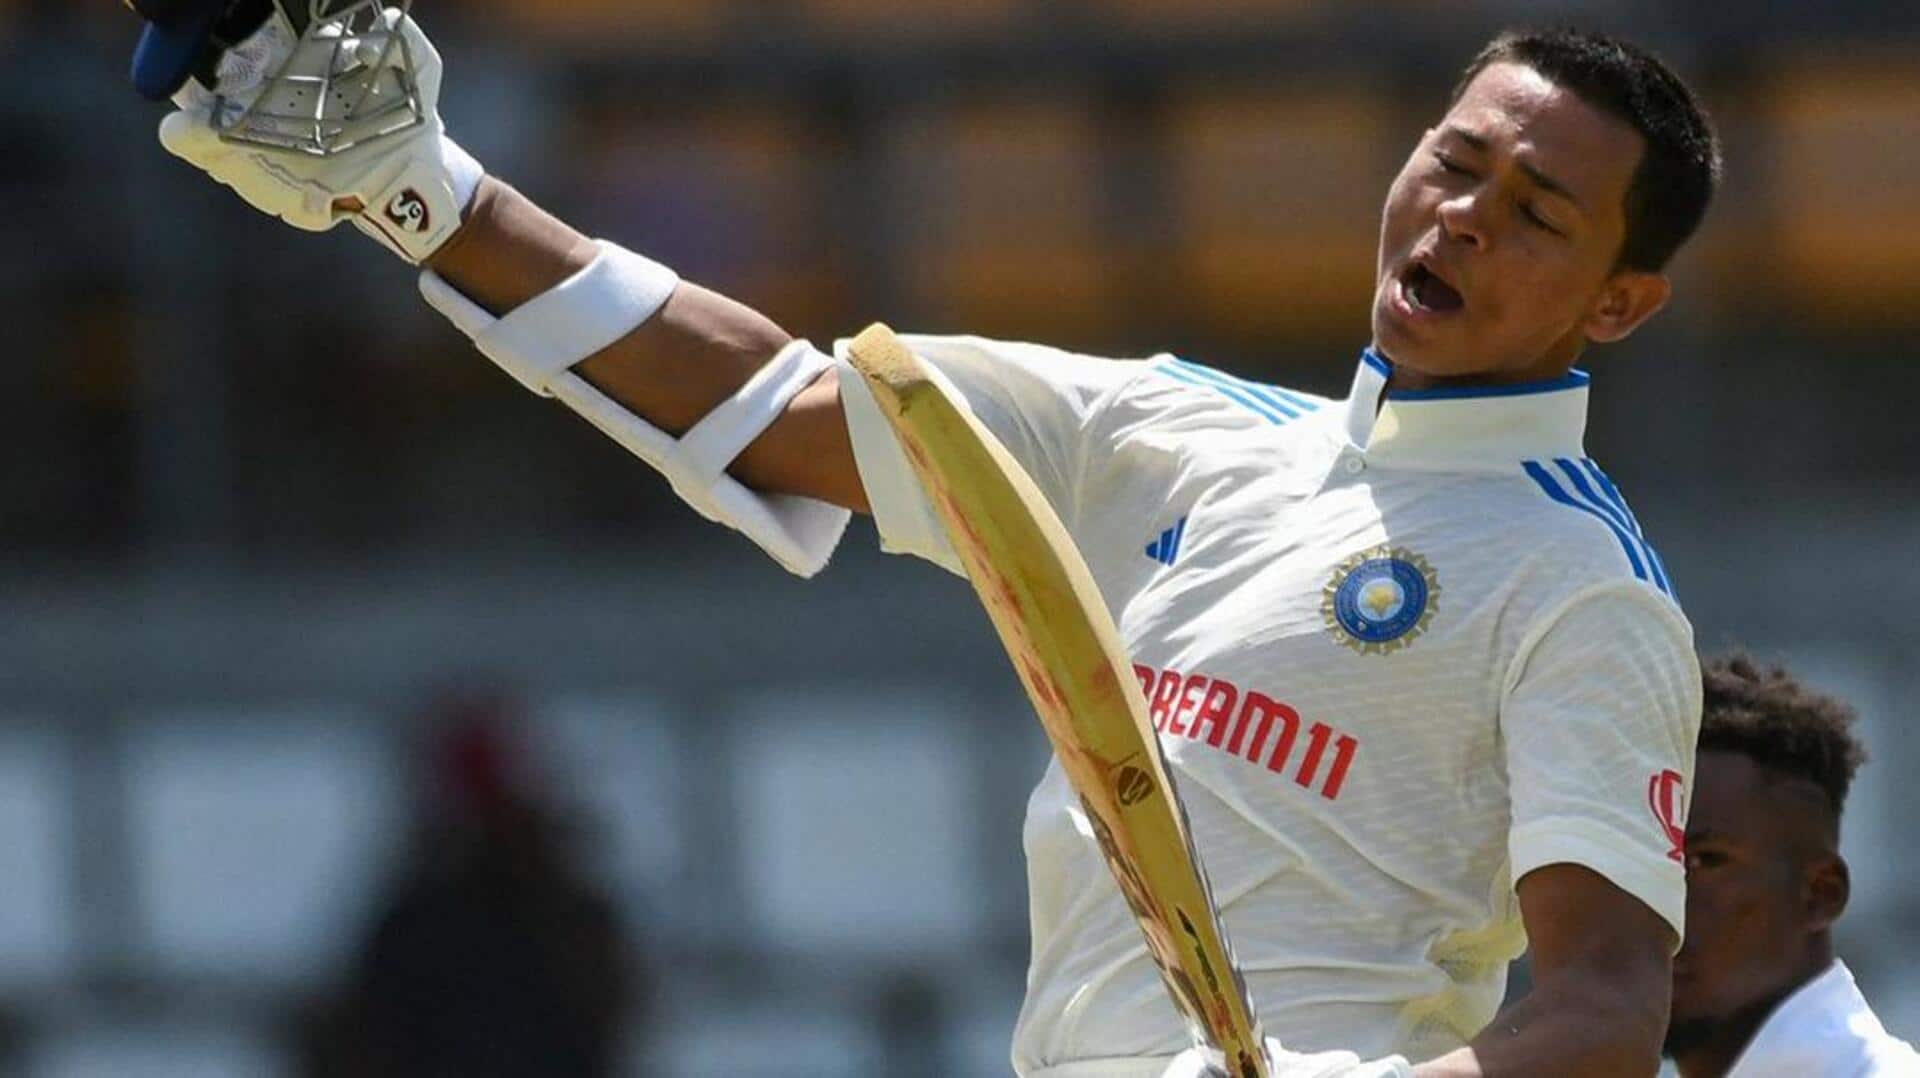 यशस्वी जायसवाल डेब्यू टेस्ट में शतक लगाने वाले चौथे युवा भारतीय बल्लेबाज बने, शीर्ष पर पृथ्वी